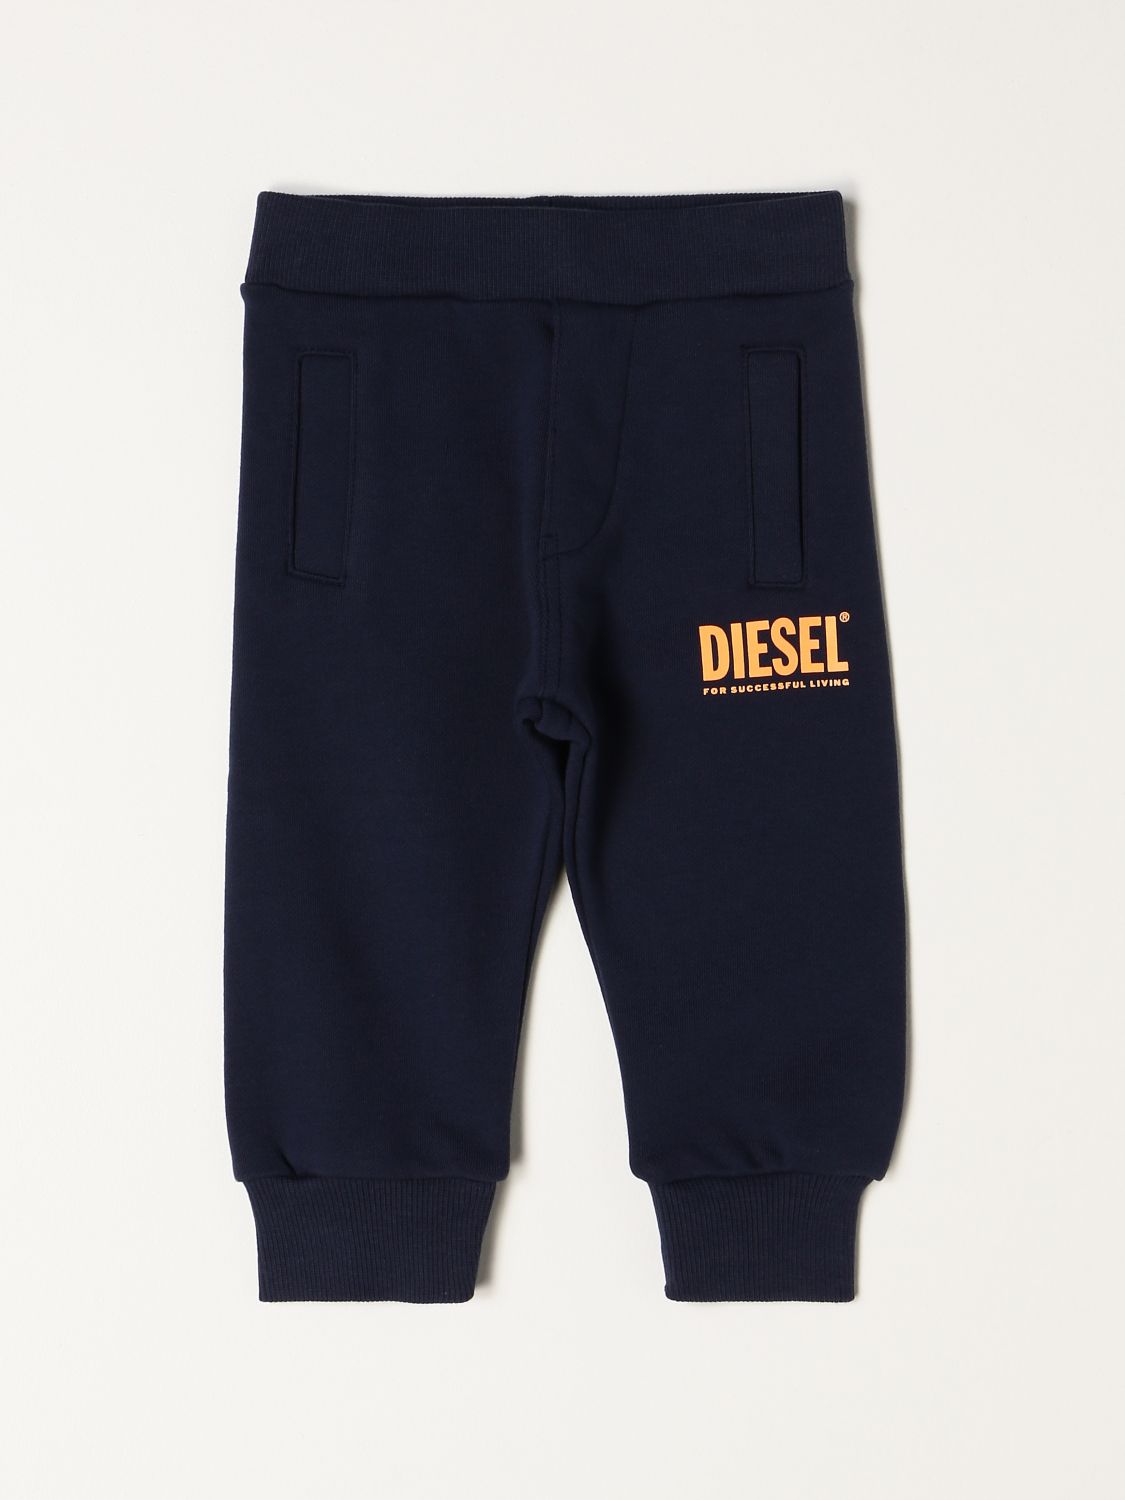 裤子 Diesel: Diesel Logo 棉质慢跑裤 蓝色 1